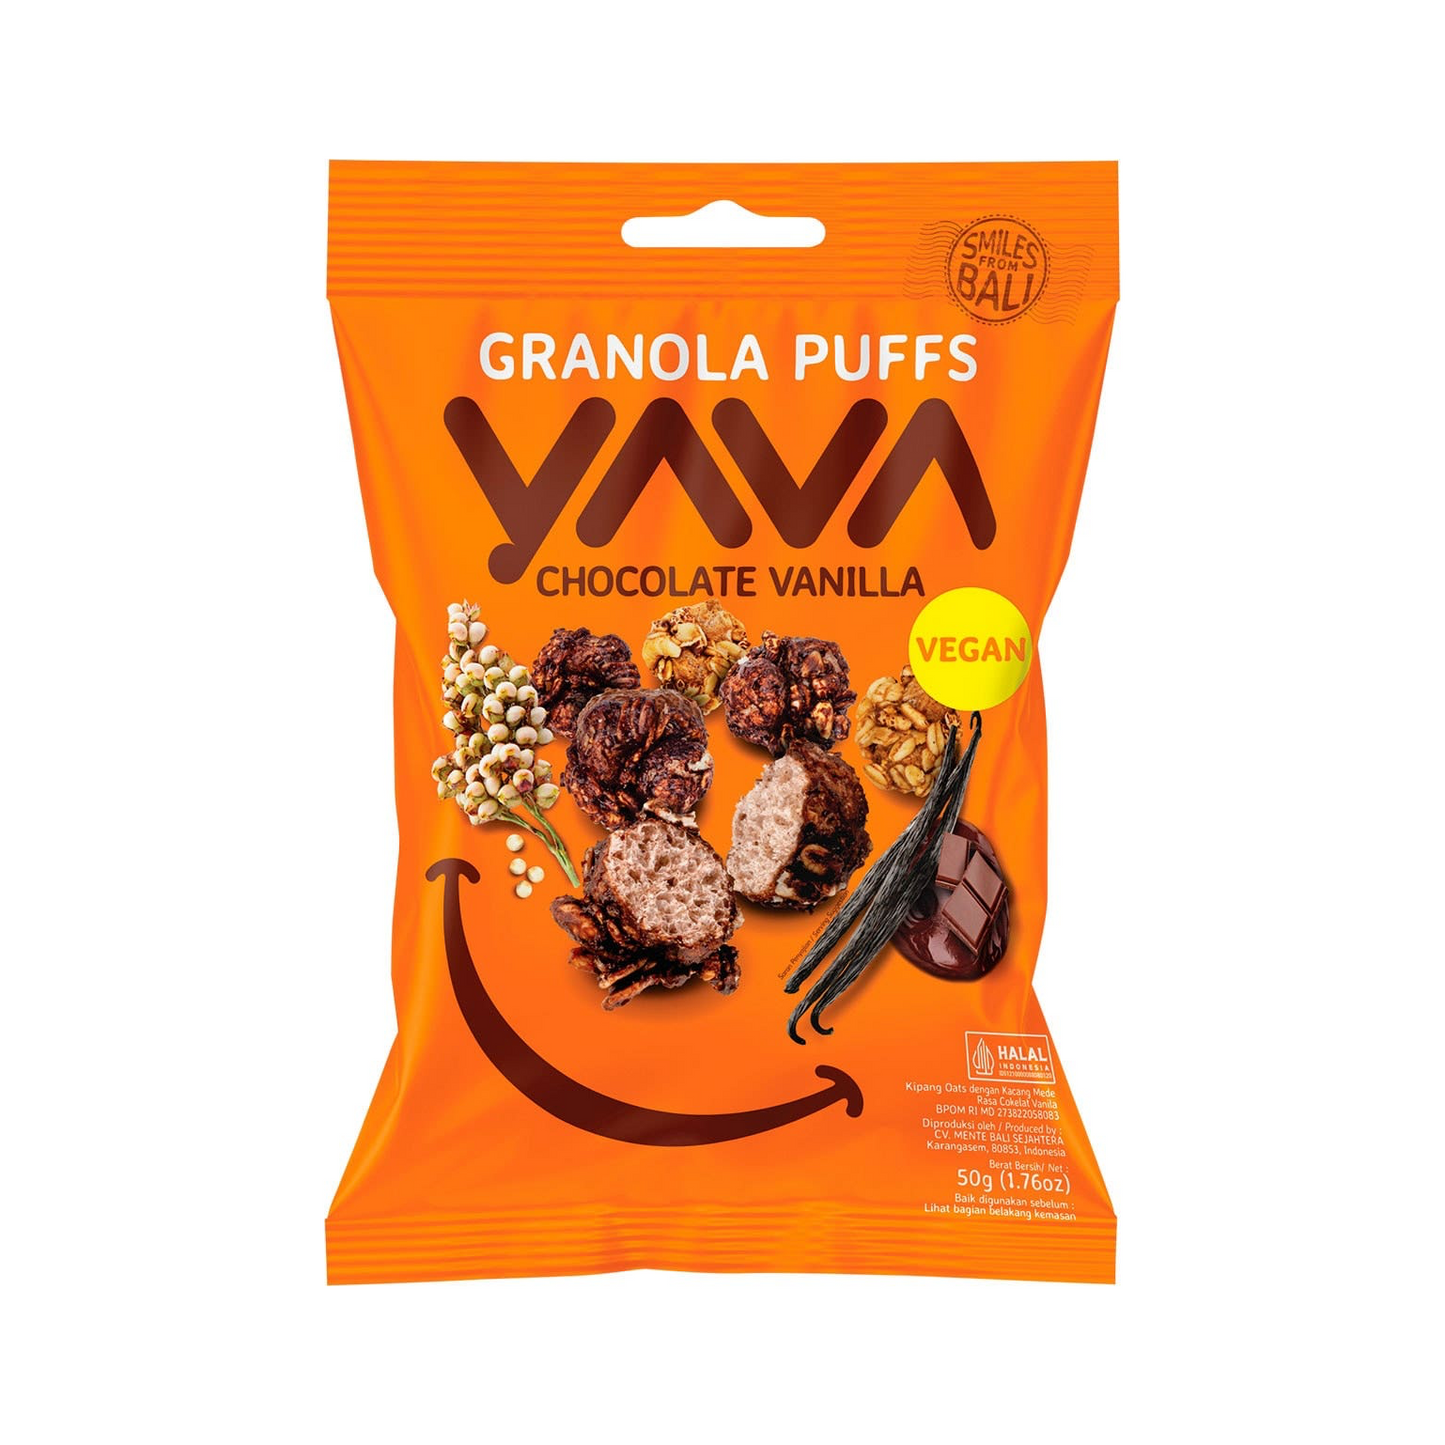 Yava Granola Puffs 50g, Chocolate Vanilla Flavour